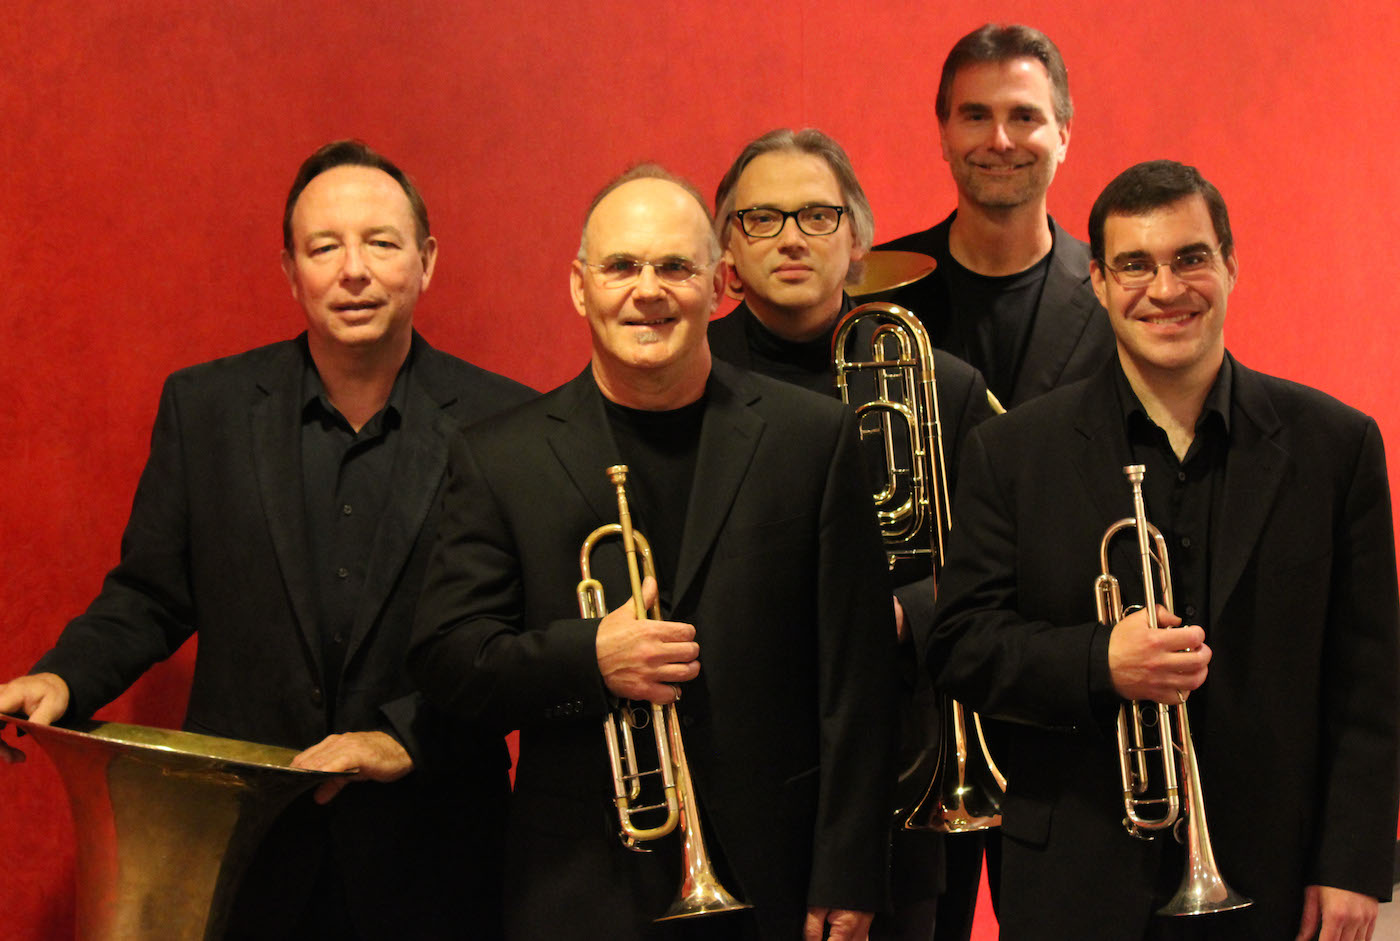 The University of Nebraska Brass Quintet will perform March 13 at 7:30 p.m. in Kimball Recital Hall.